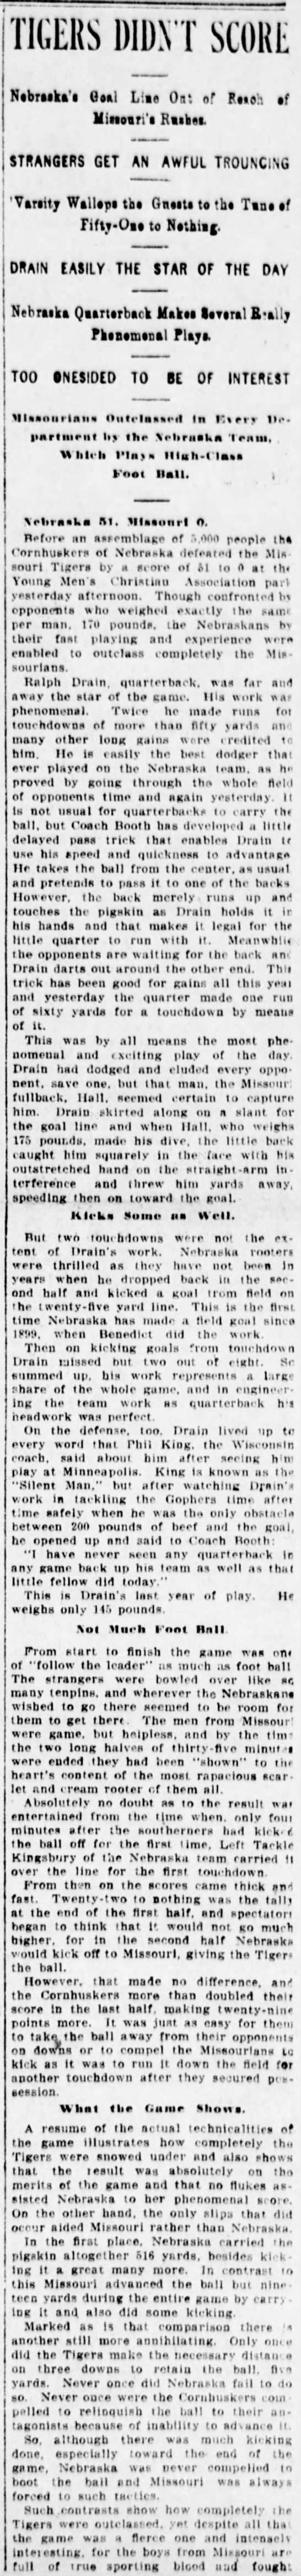 1901 Nebraska-Missouri football, part 1 - 